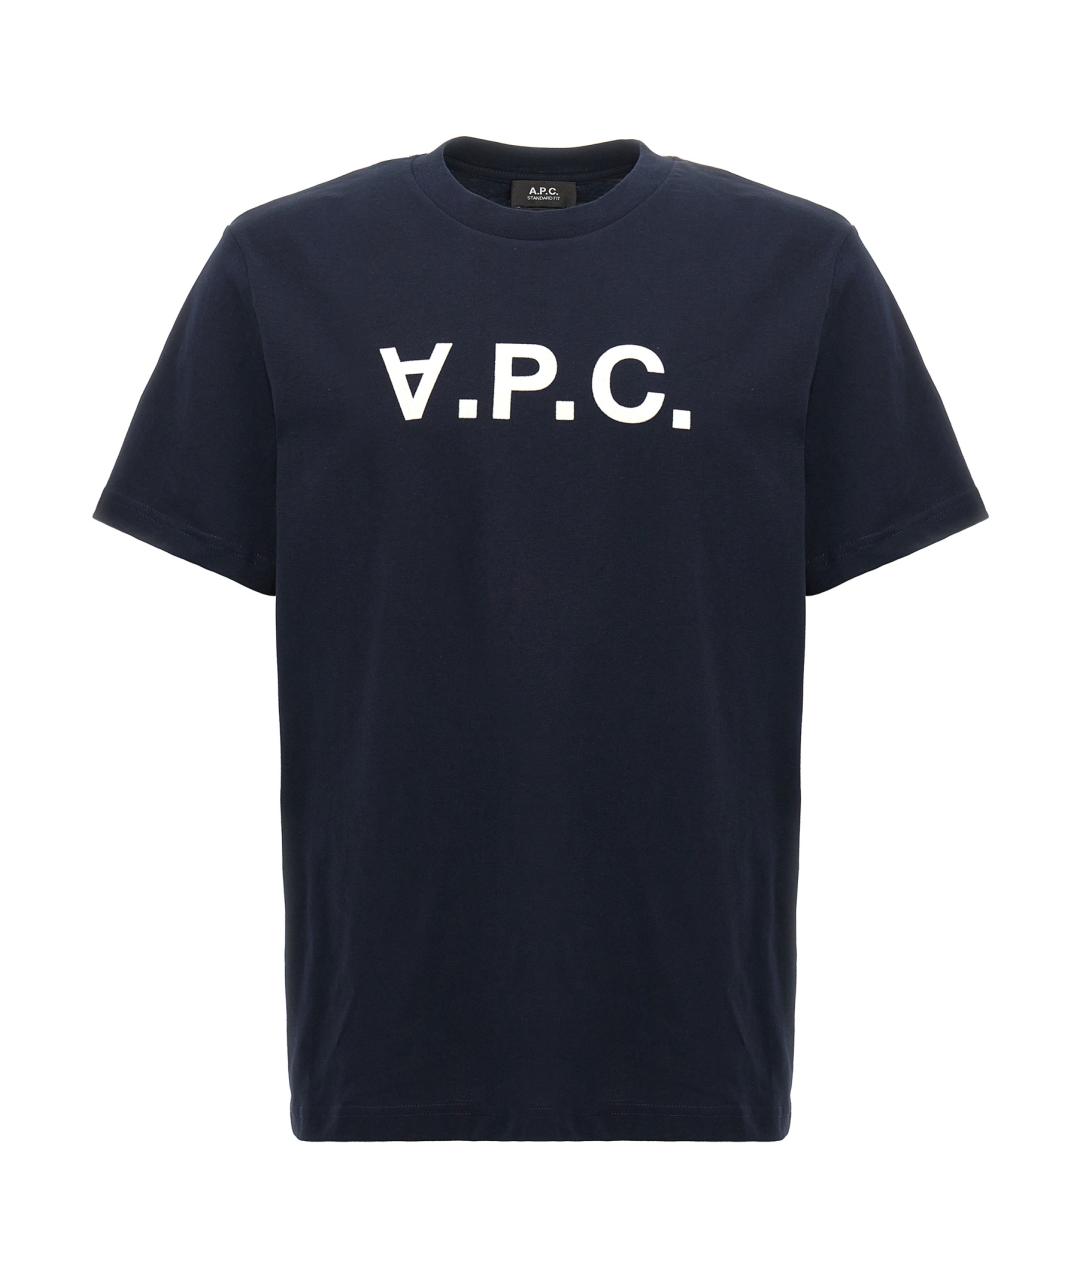 A.P.C. Синяя хлопковая футболка, фото 1